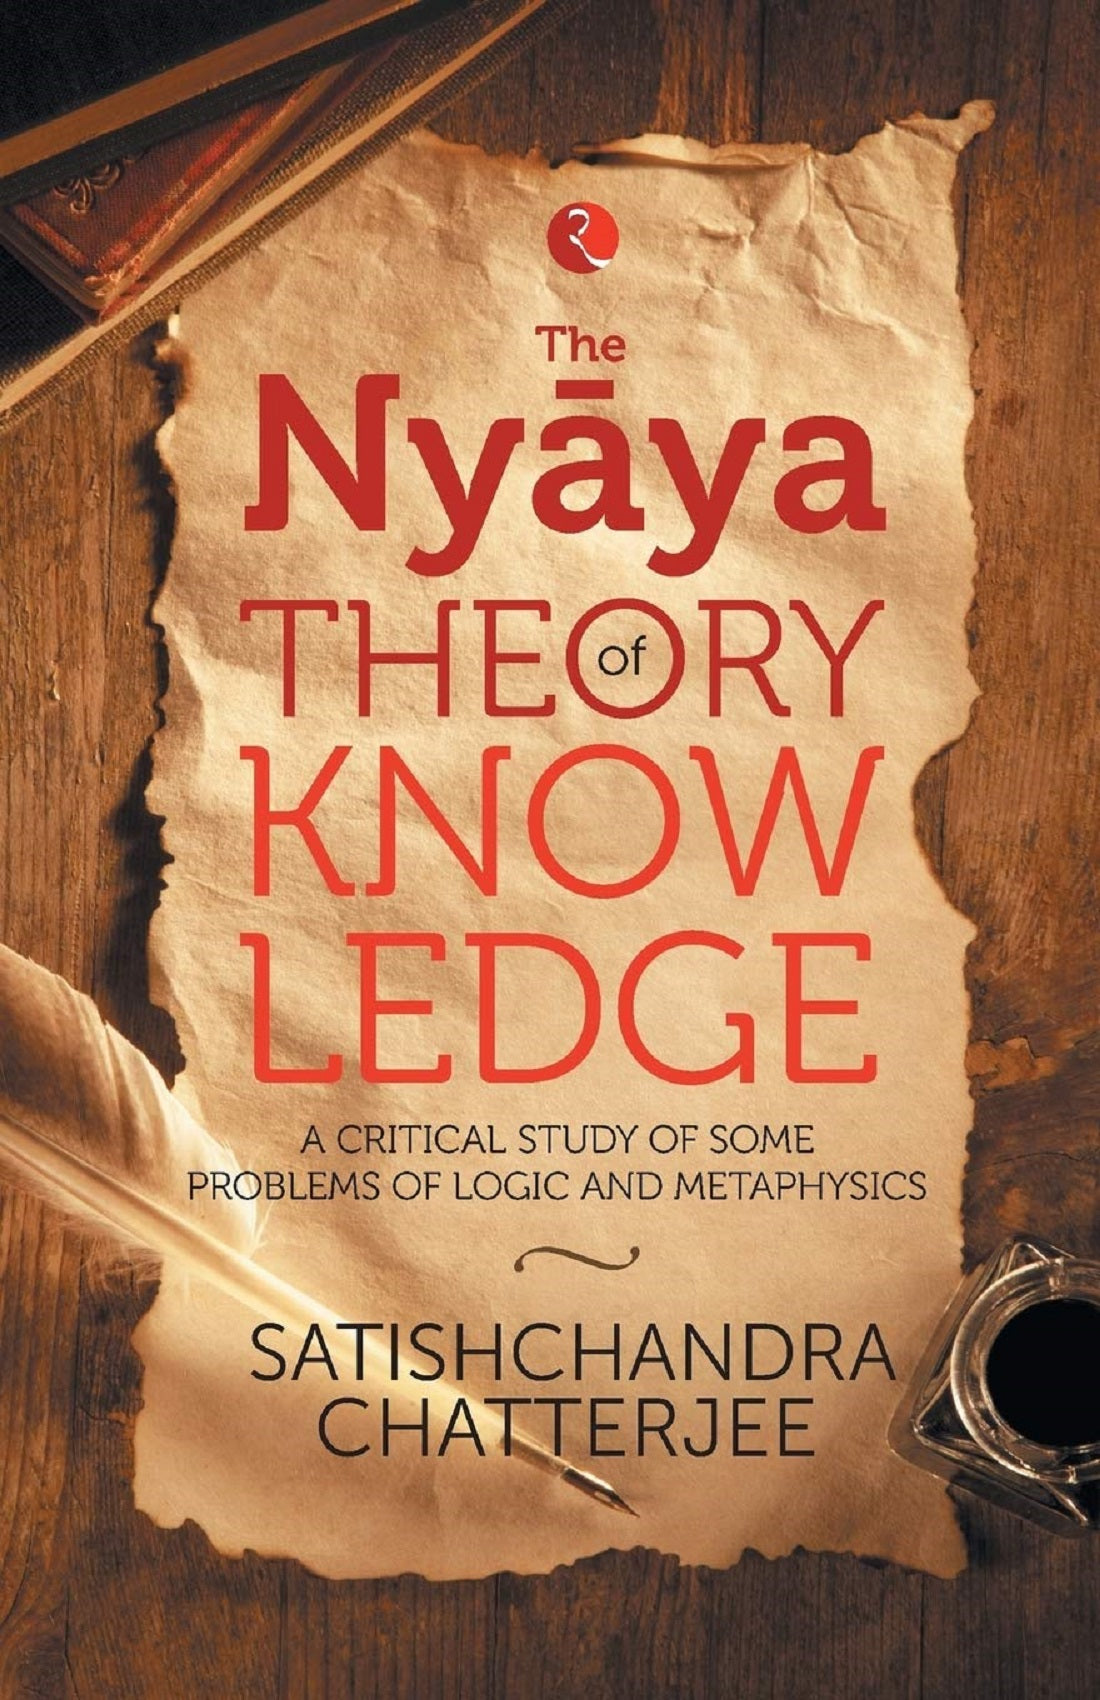 THE NYAYA THEORY OF KNOWLEDGE